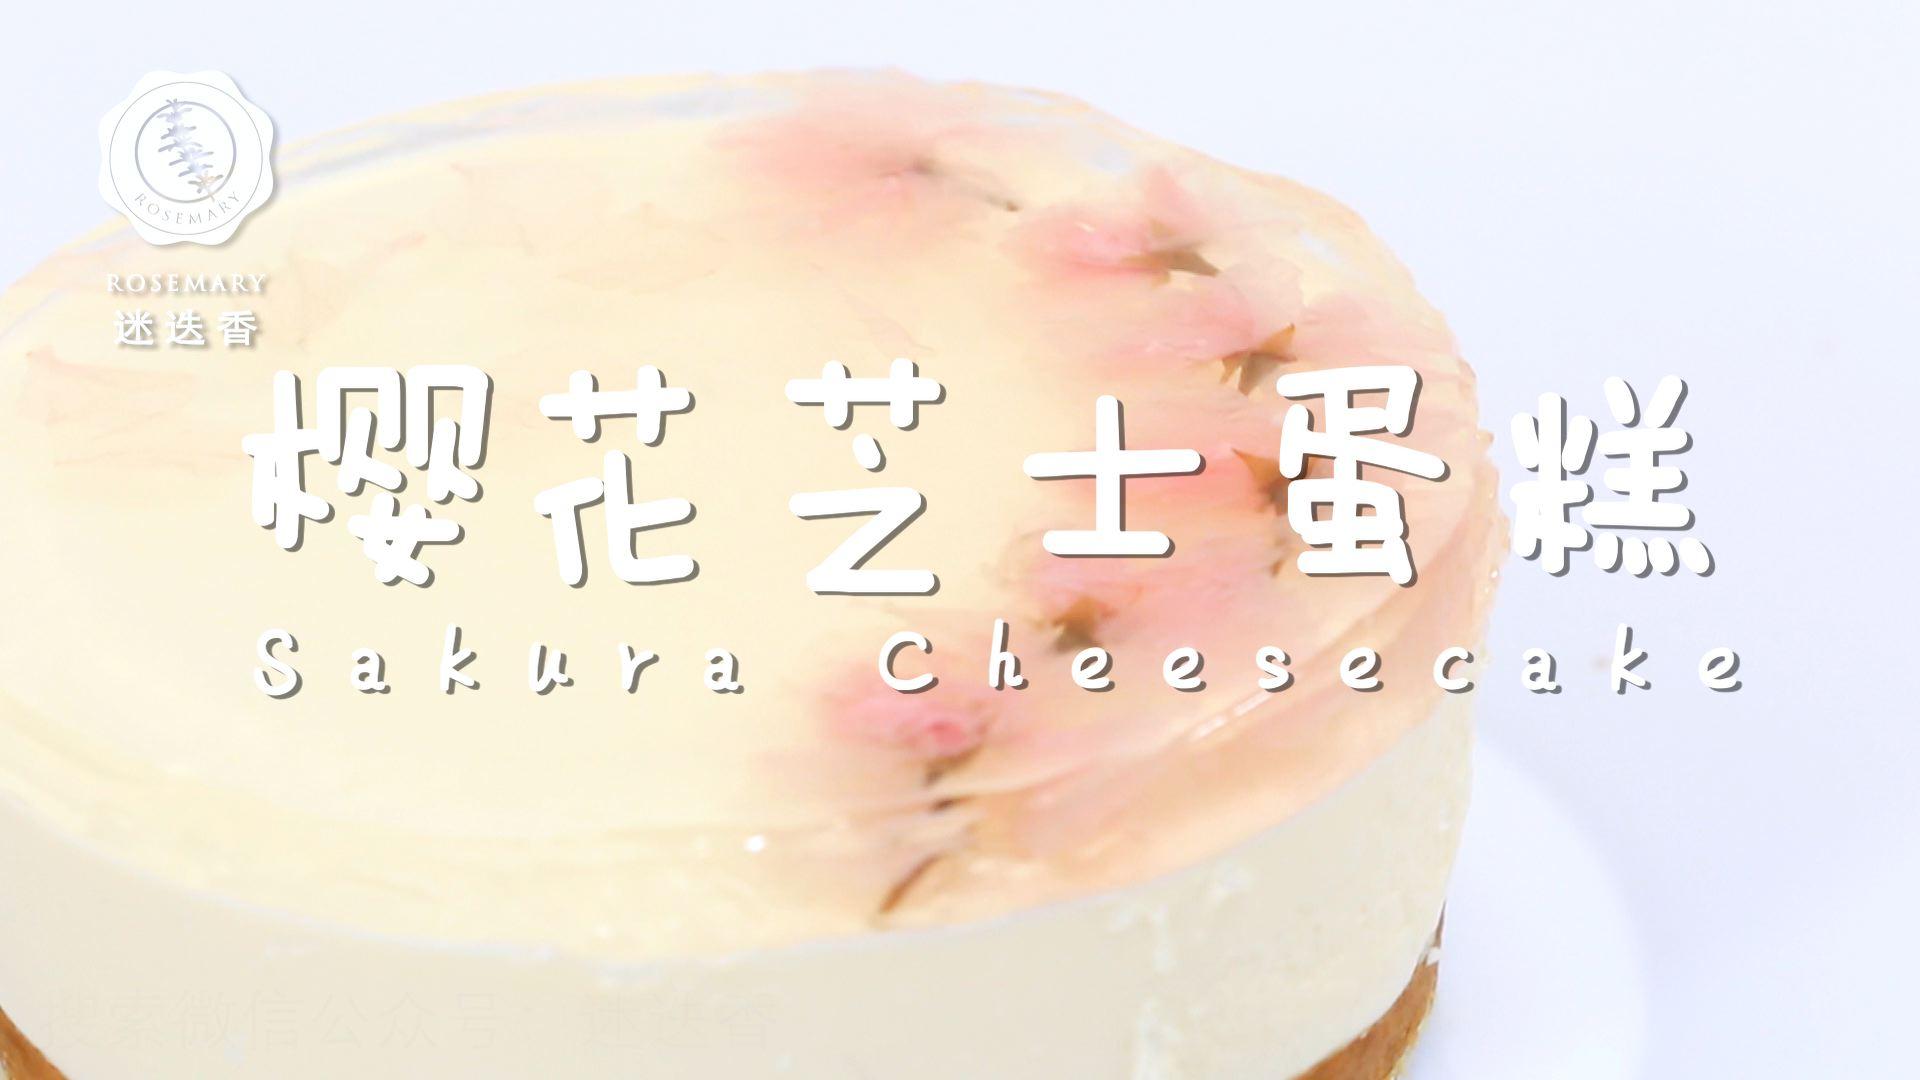 Violet's Kitchen ~♥紫羅蘭的爱心厨房♥~ : 樱花芝士蛋糕 Sakura Cheese Cake | 部落格二周年庆&抽奖 ...